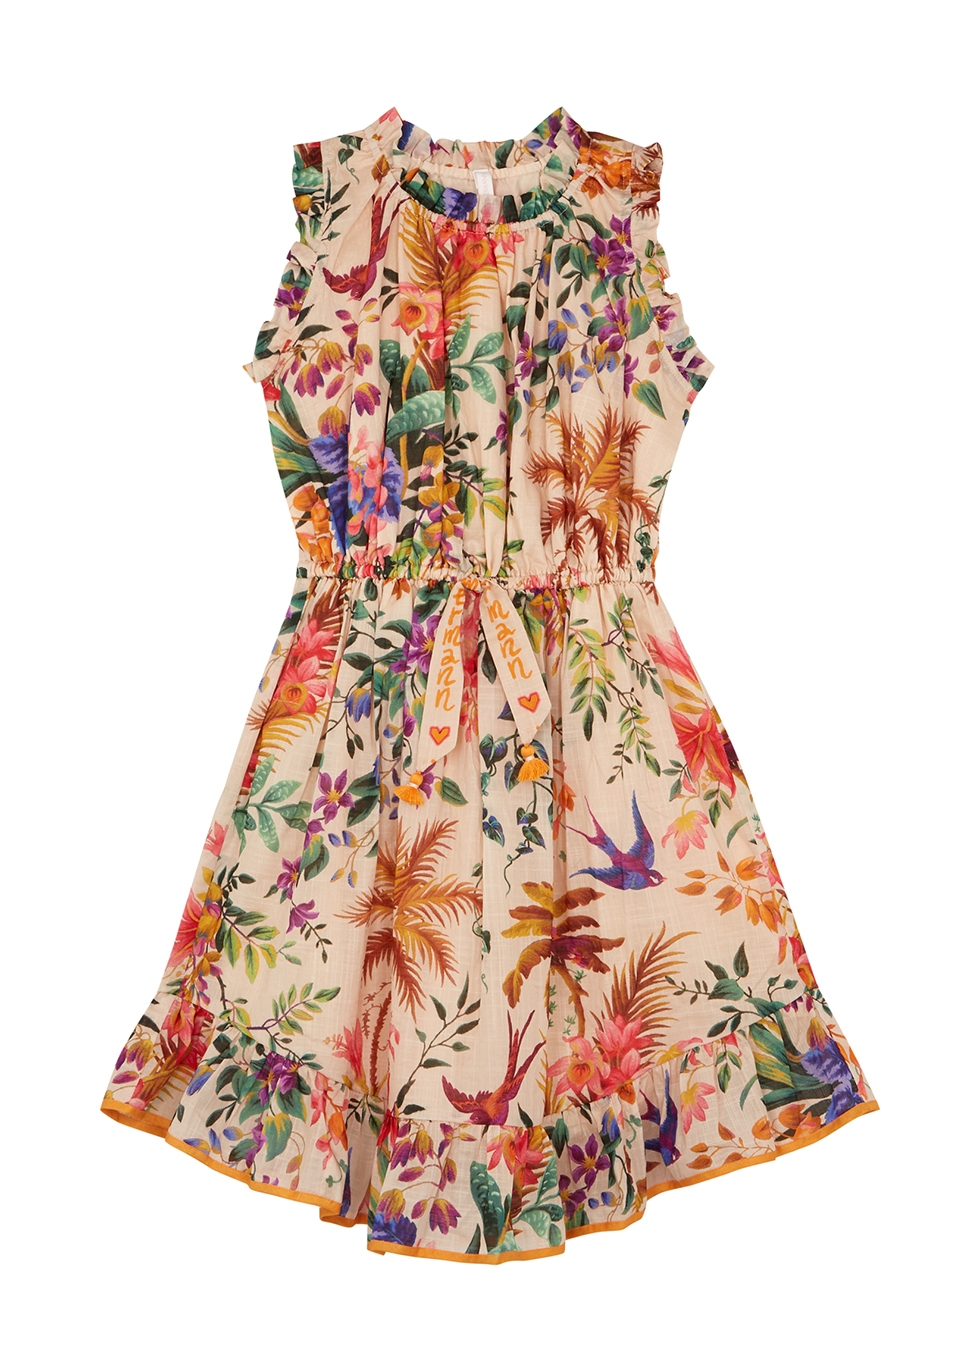 Tropicana floral-print cotton dress